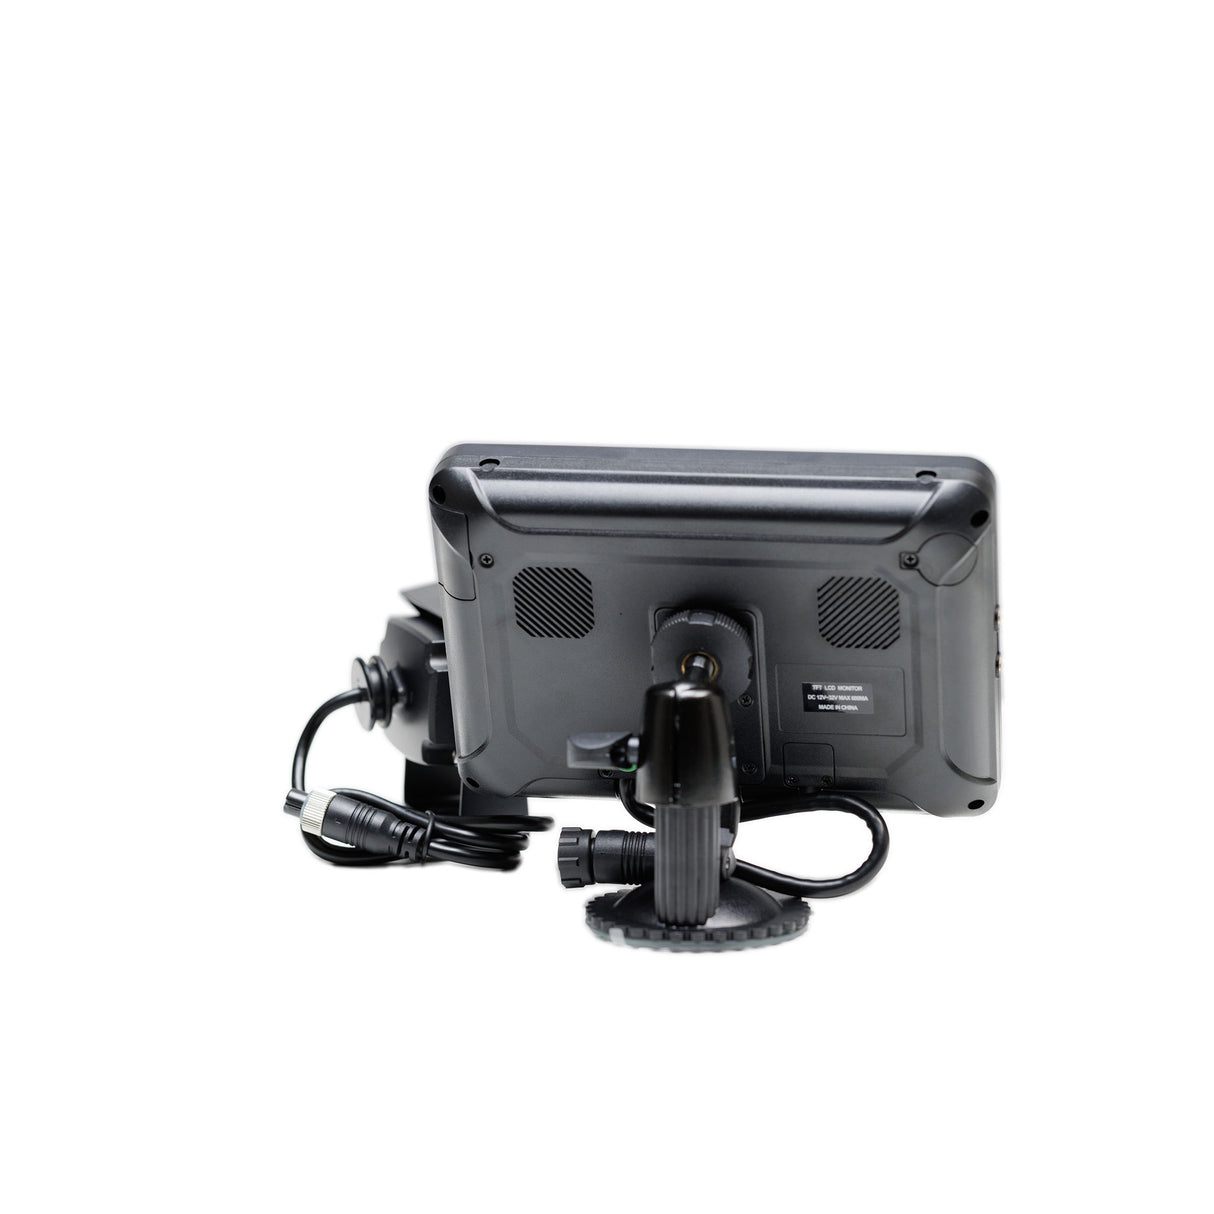 12V-36V 7" AHD Monitor DVR with Reverse Cameras Kit for Caravan Truck Campervan